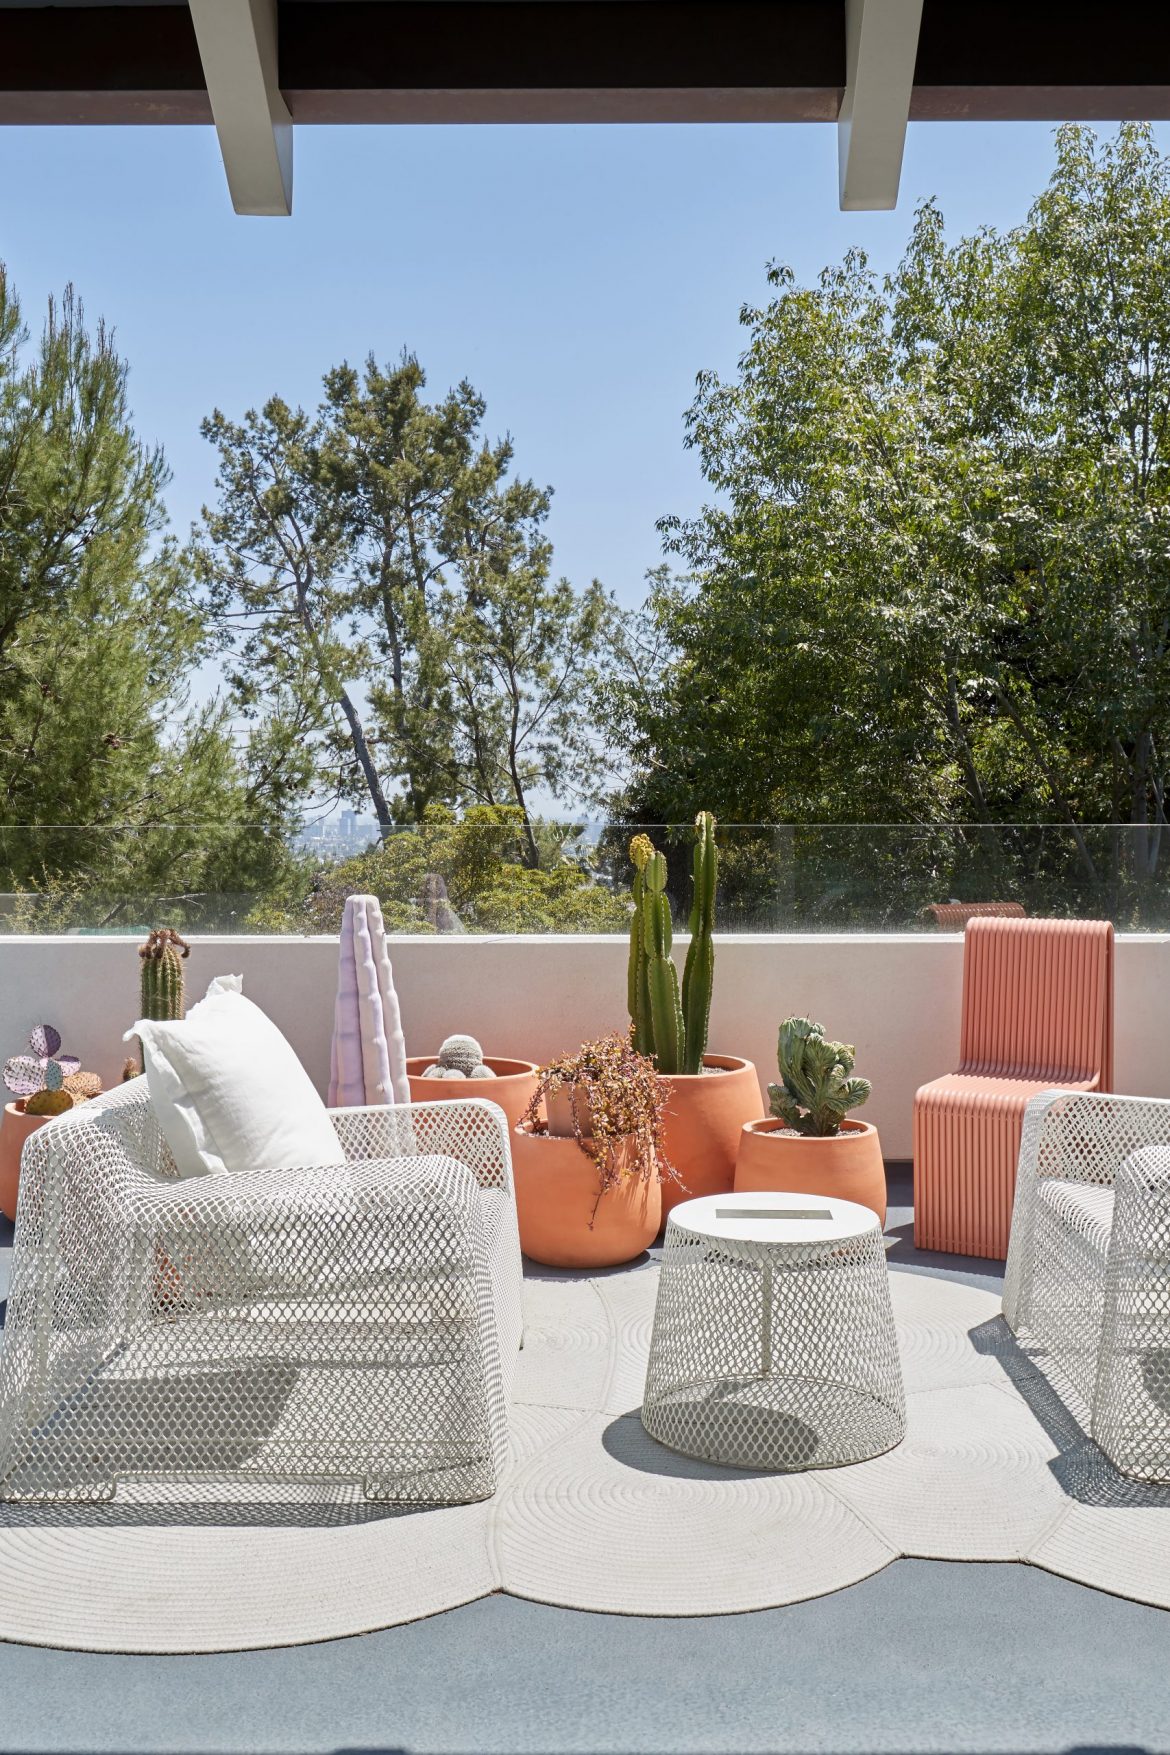 Ghislaine Viñas terrace with white and orange furniture